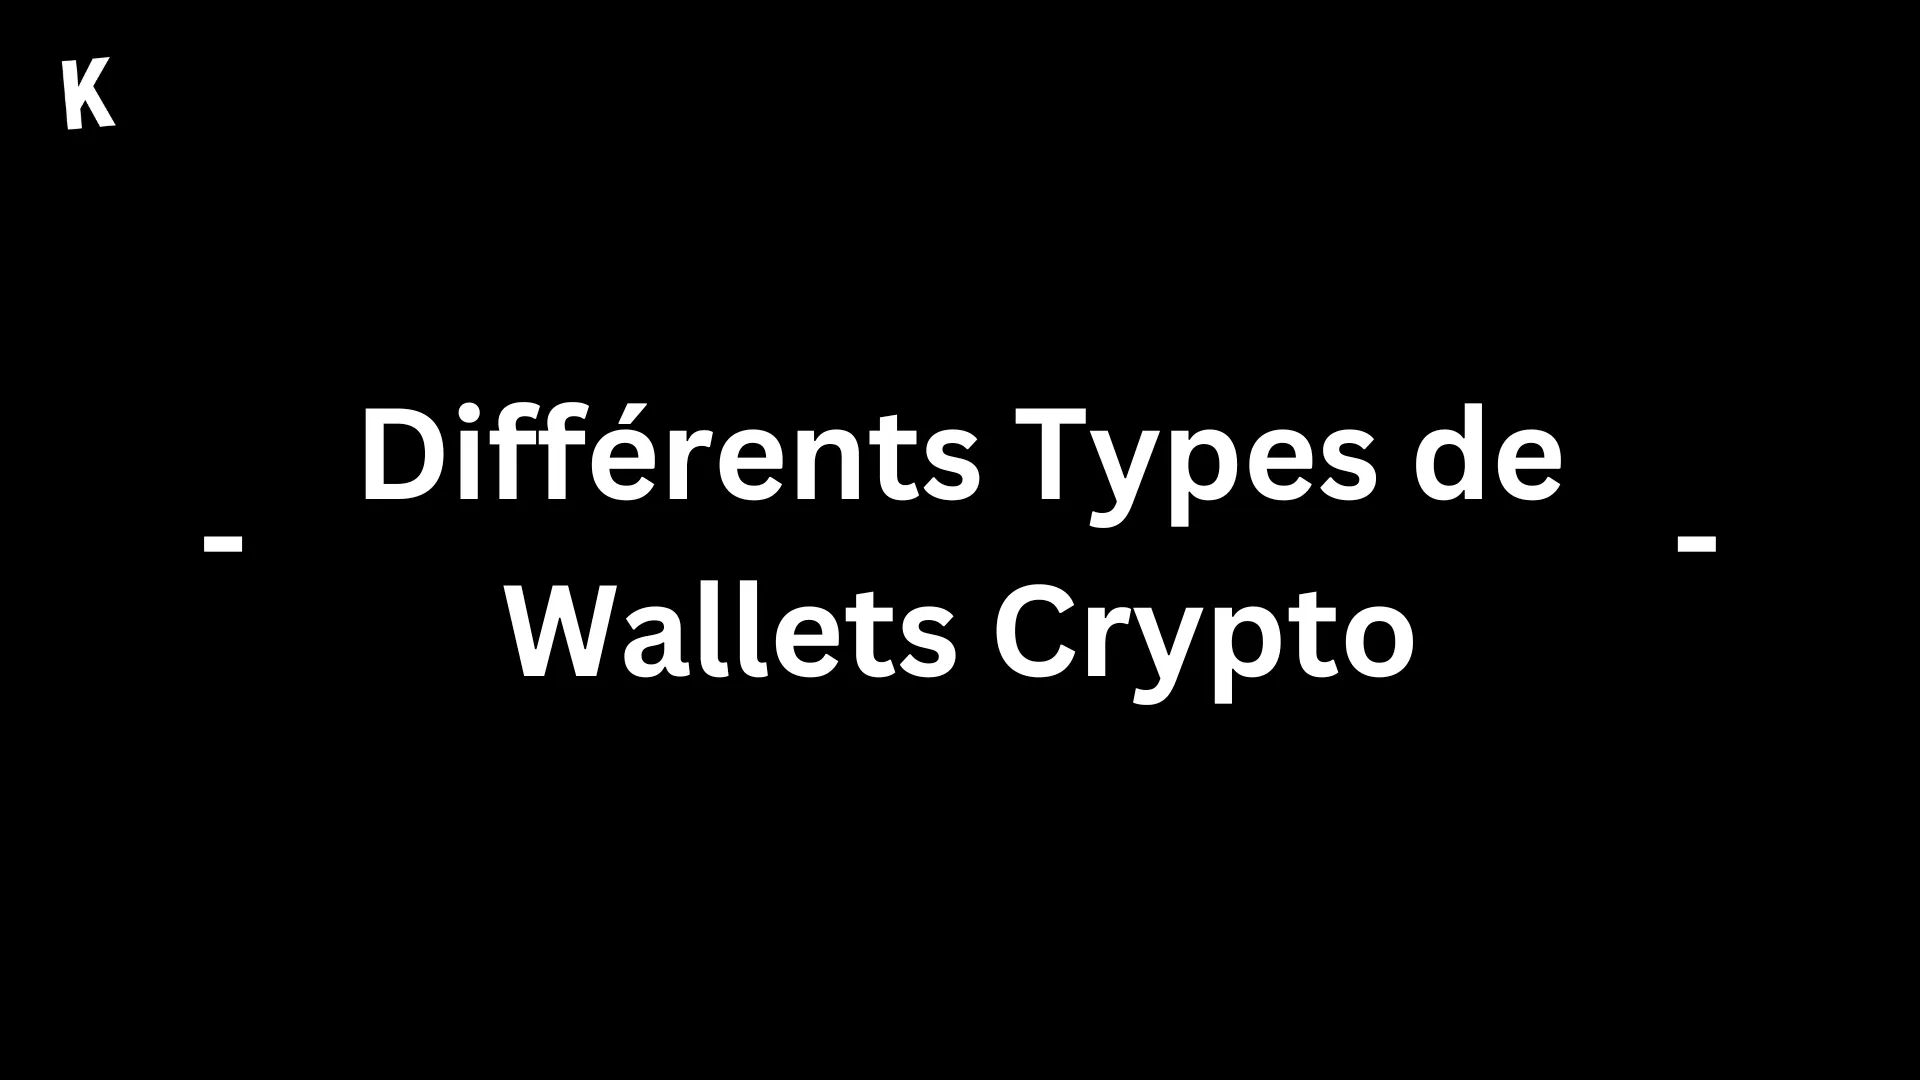 Différents Types de Wallets Crypto